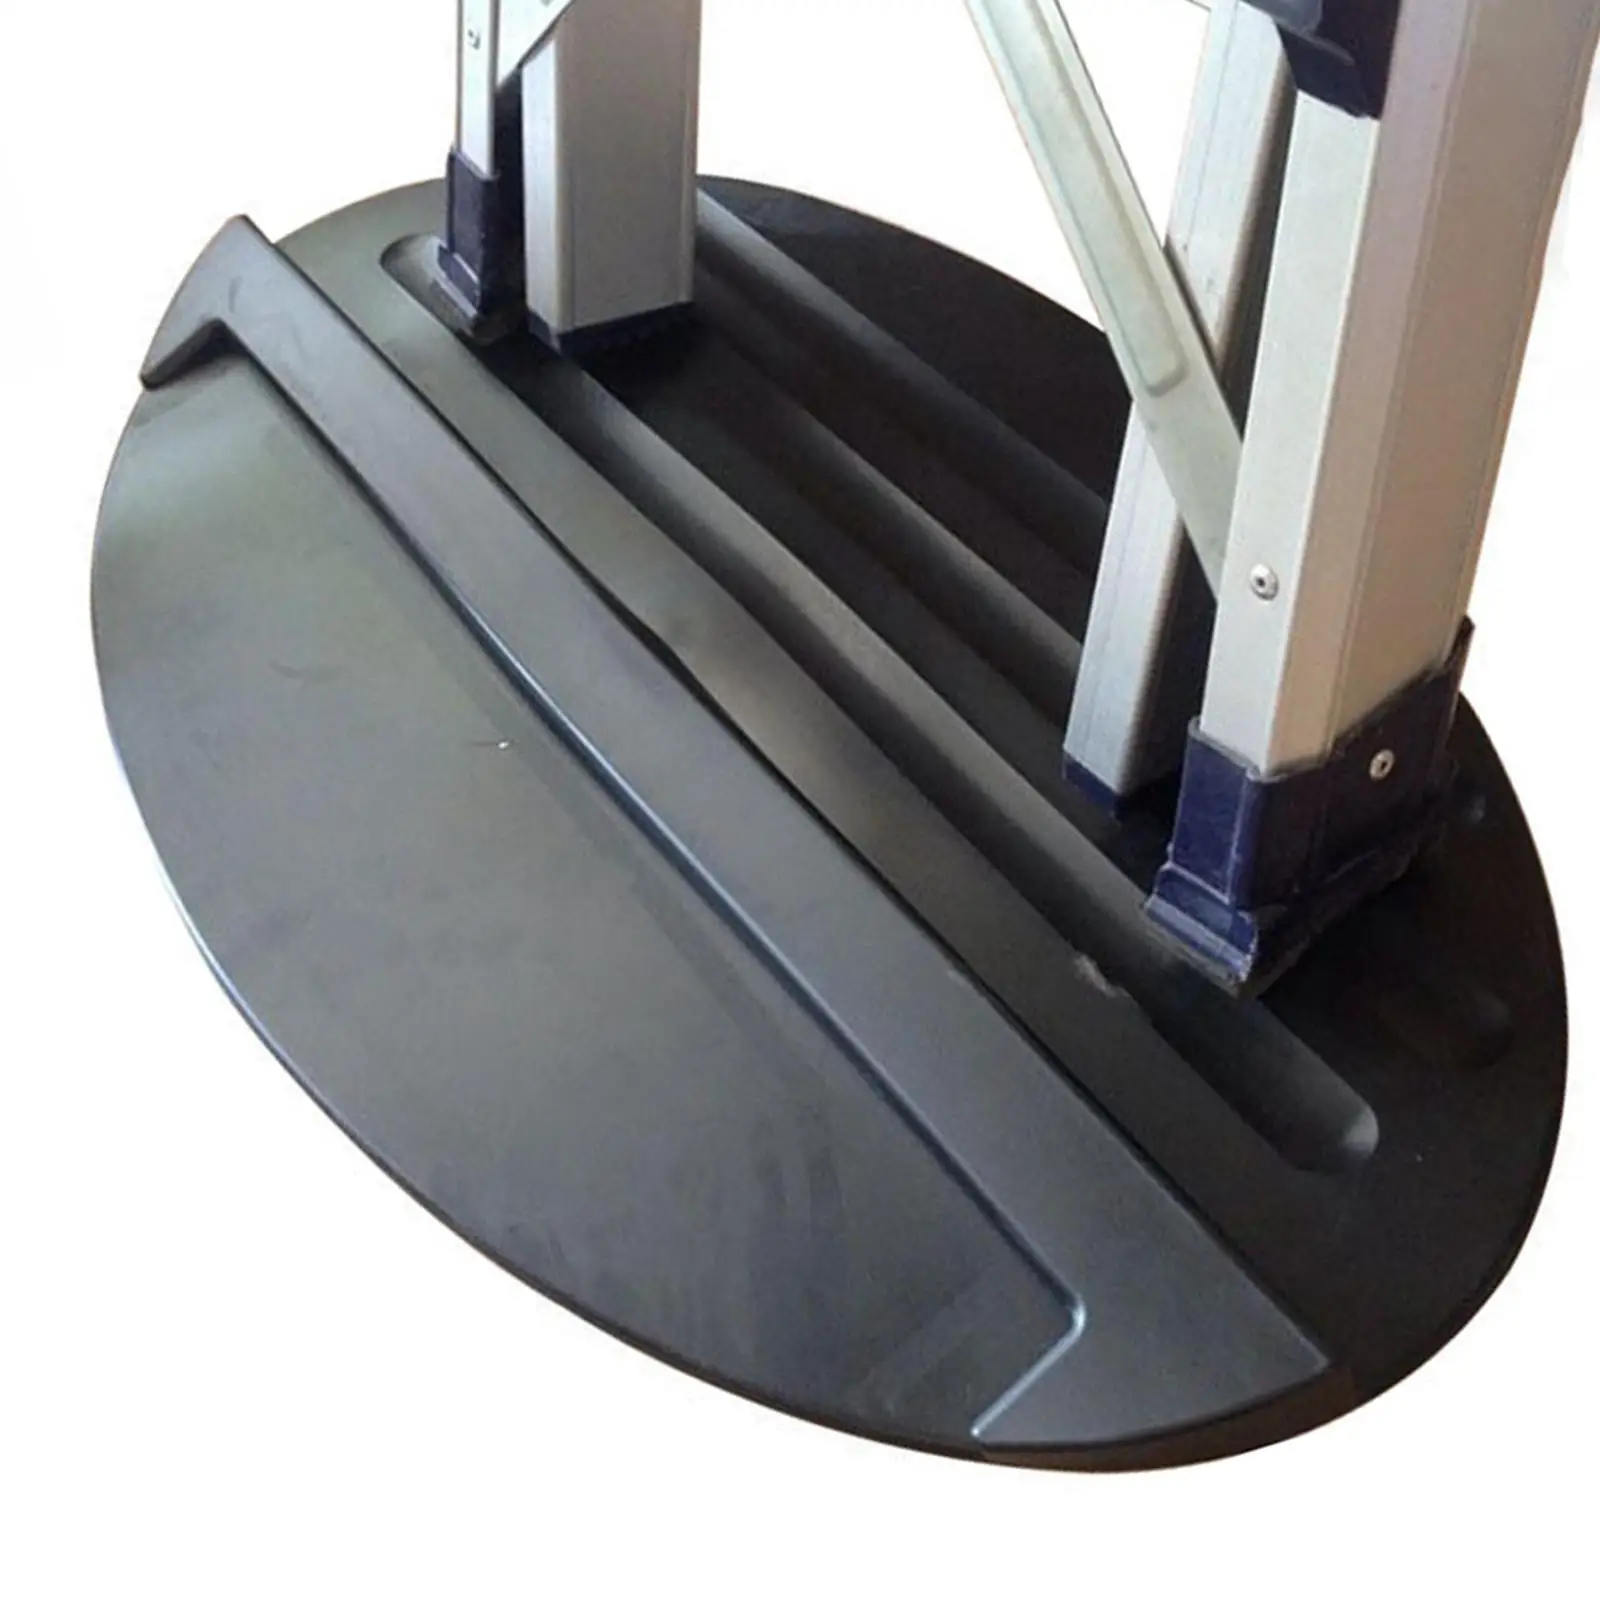 Extension Ladder Mat Non Slip Rubber Floor Protection Anti Slip Pad Rug Black Color